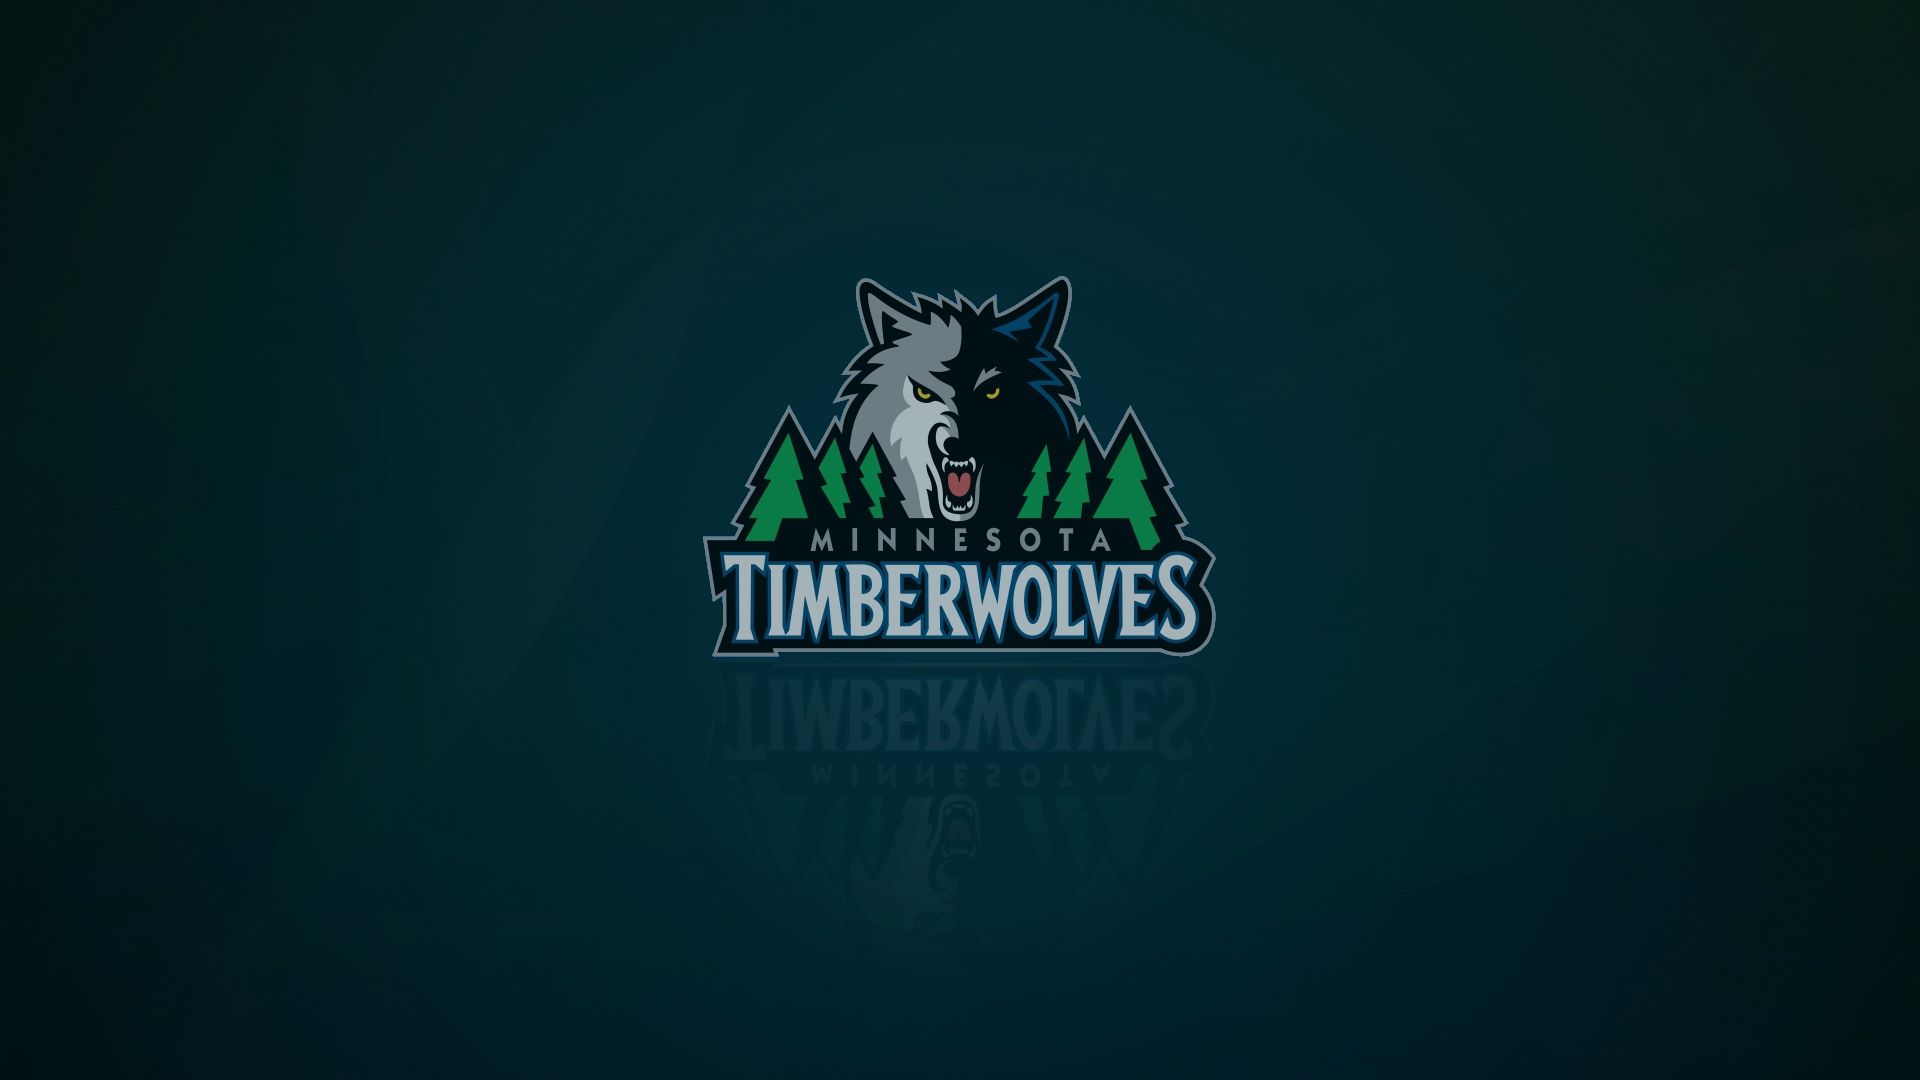 Minnesota Timberwolves picture image